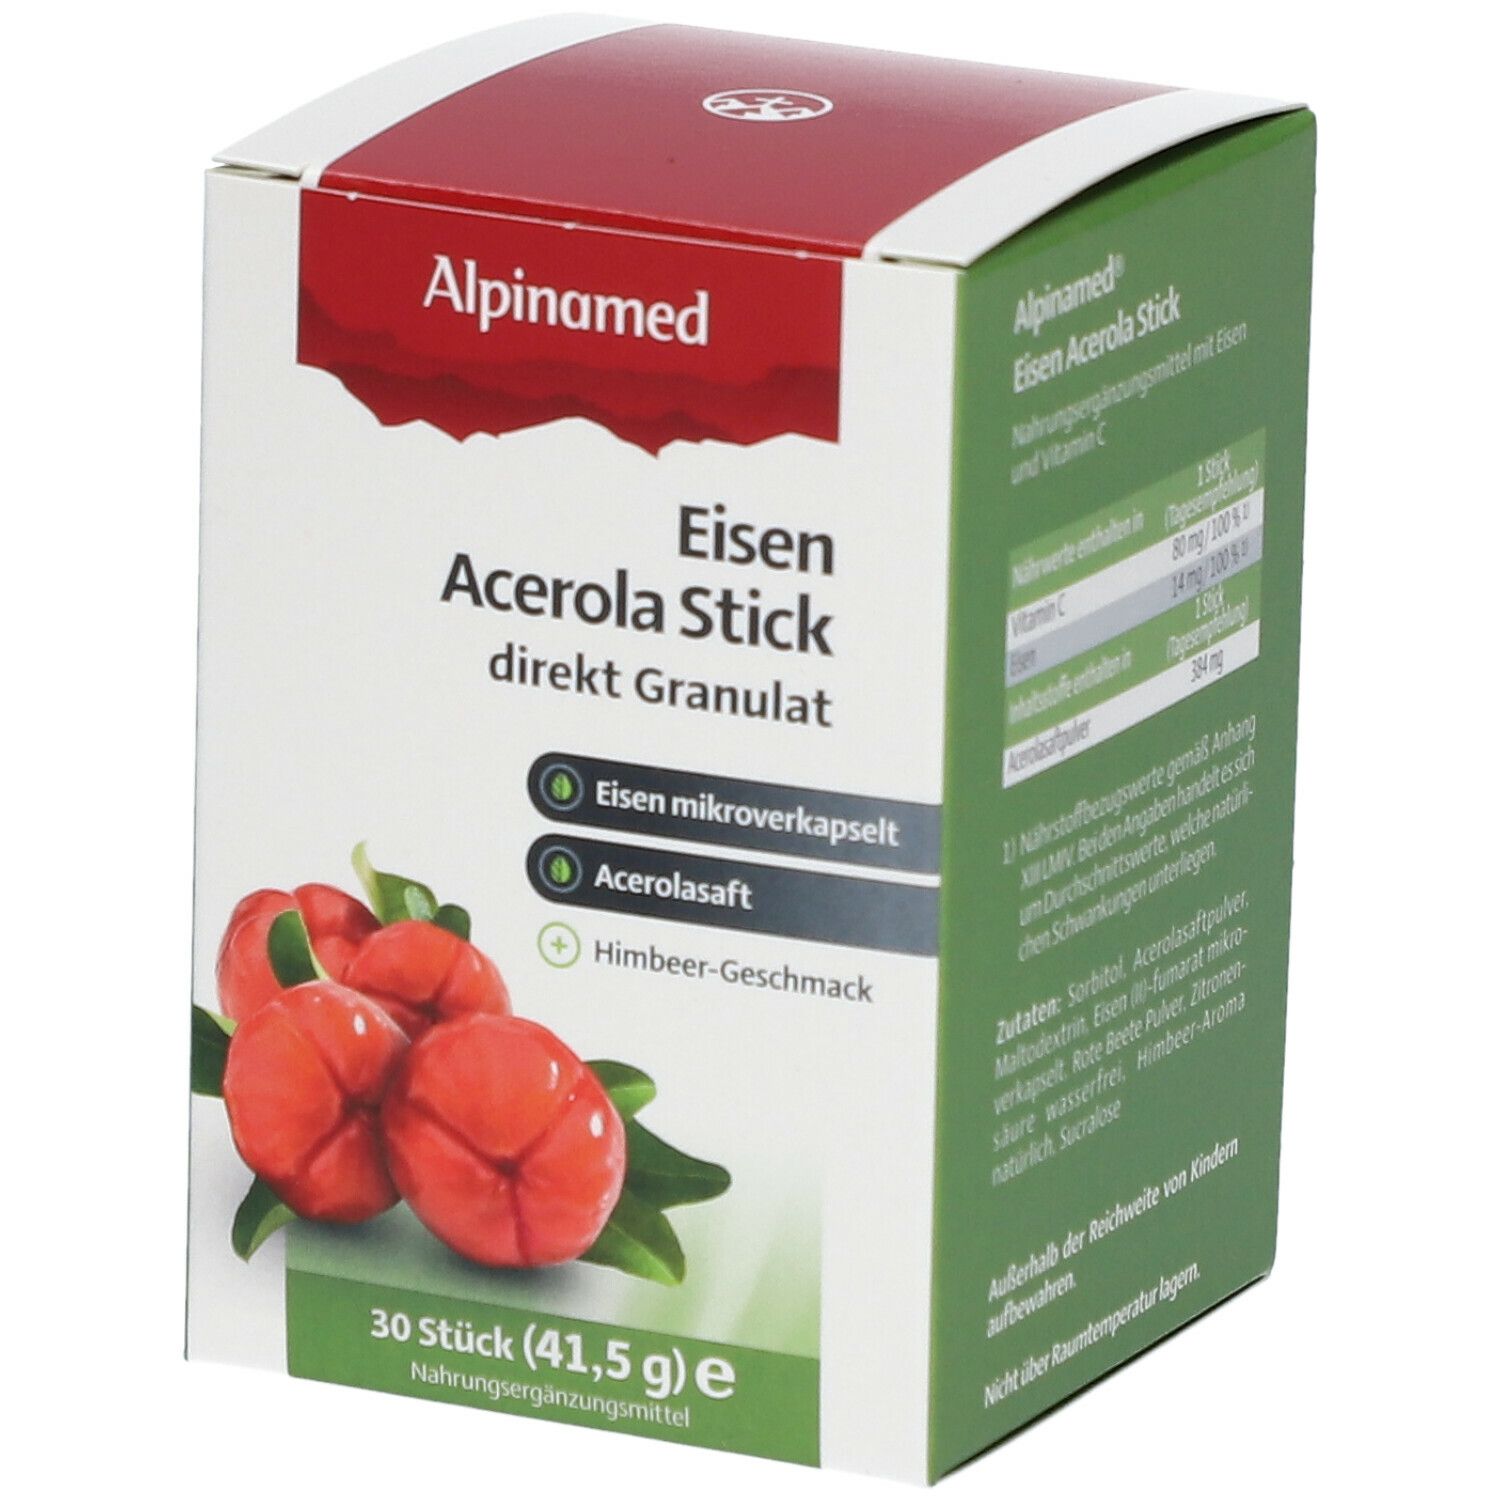 Image of Alpinamed® Eisen Acerola